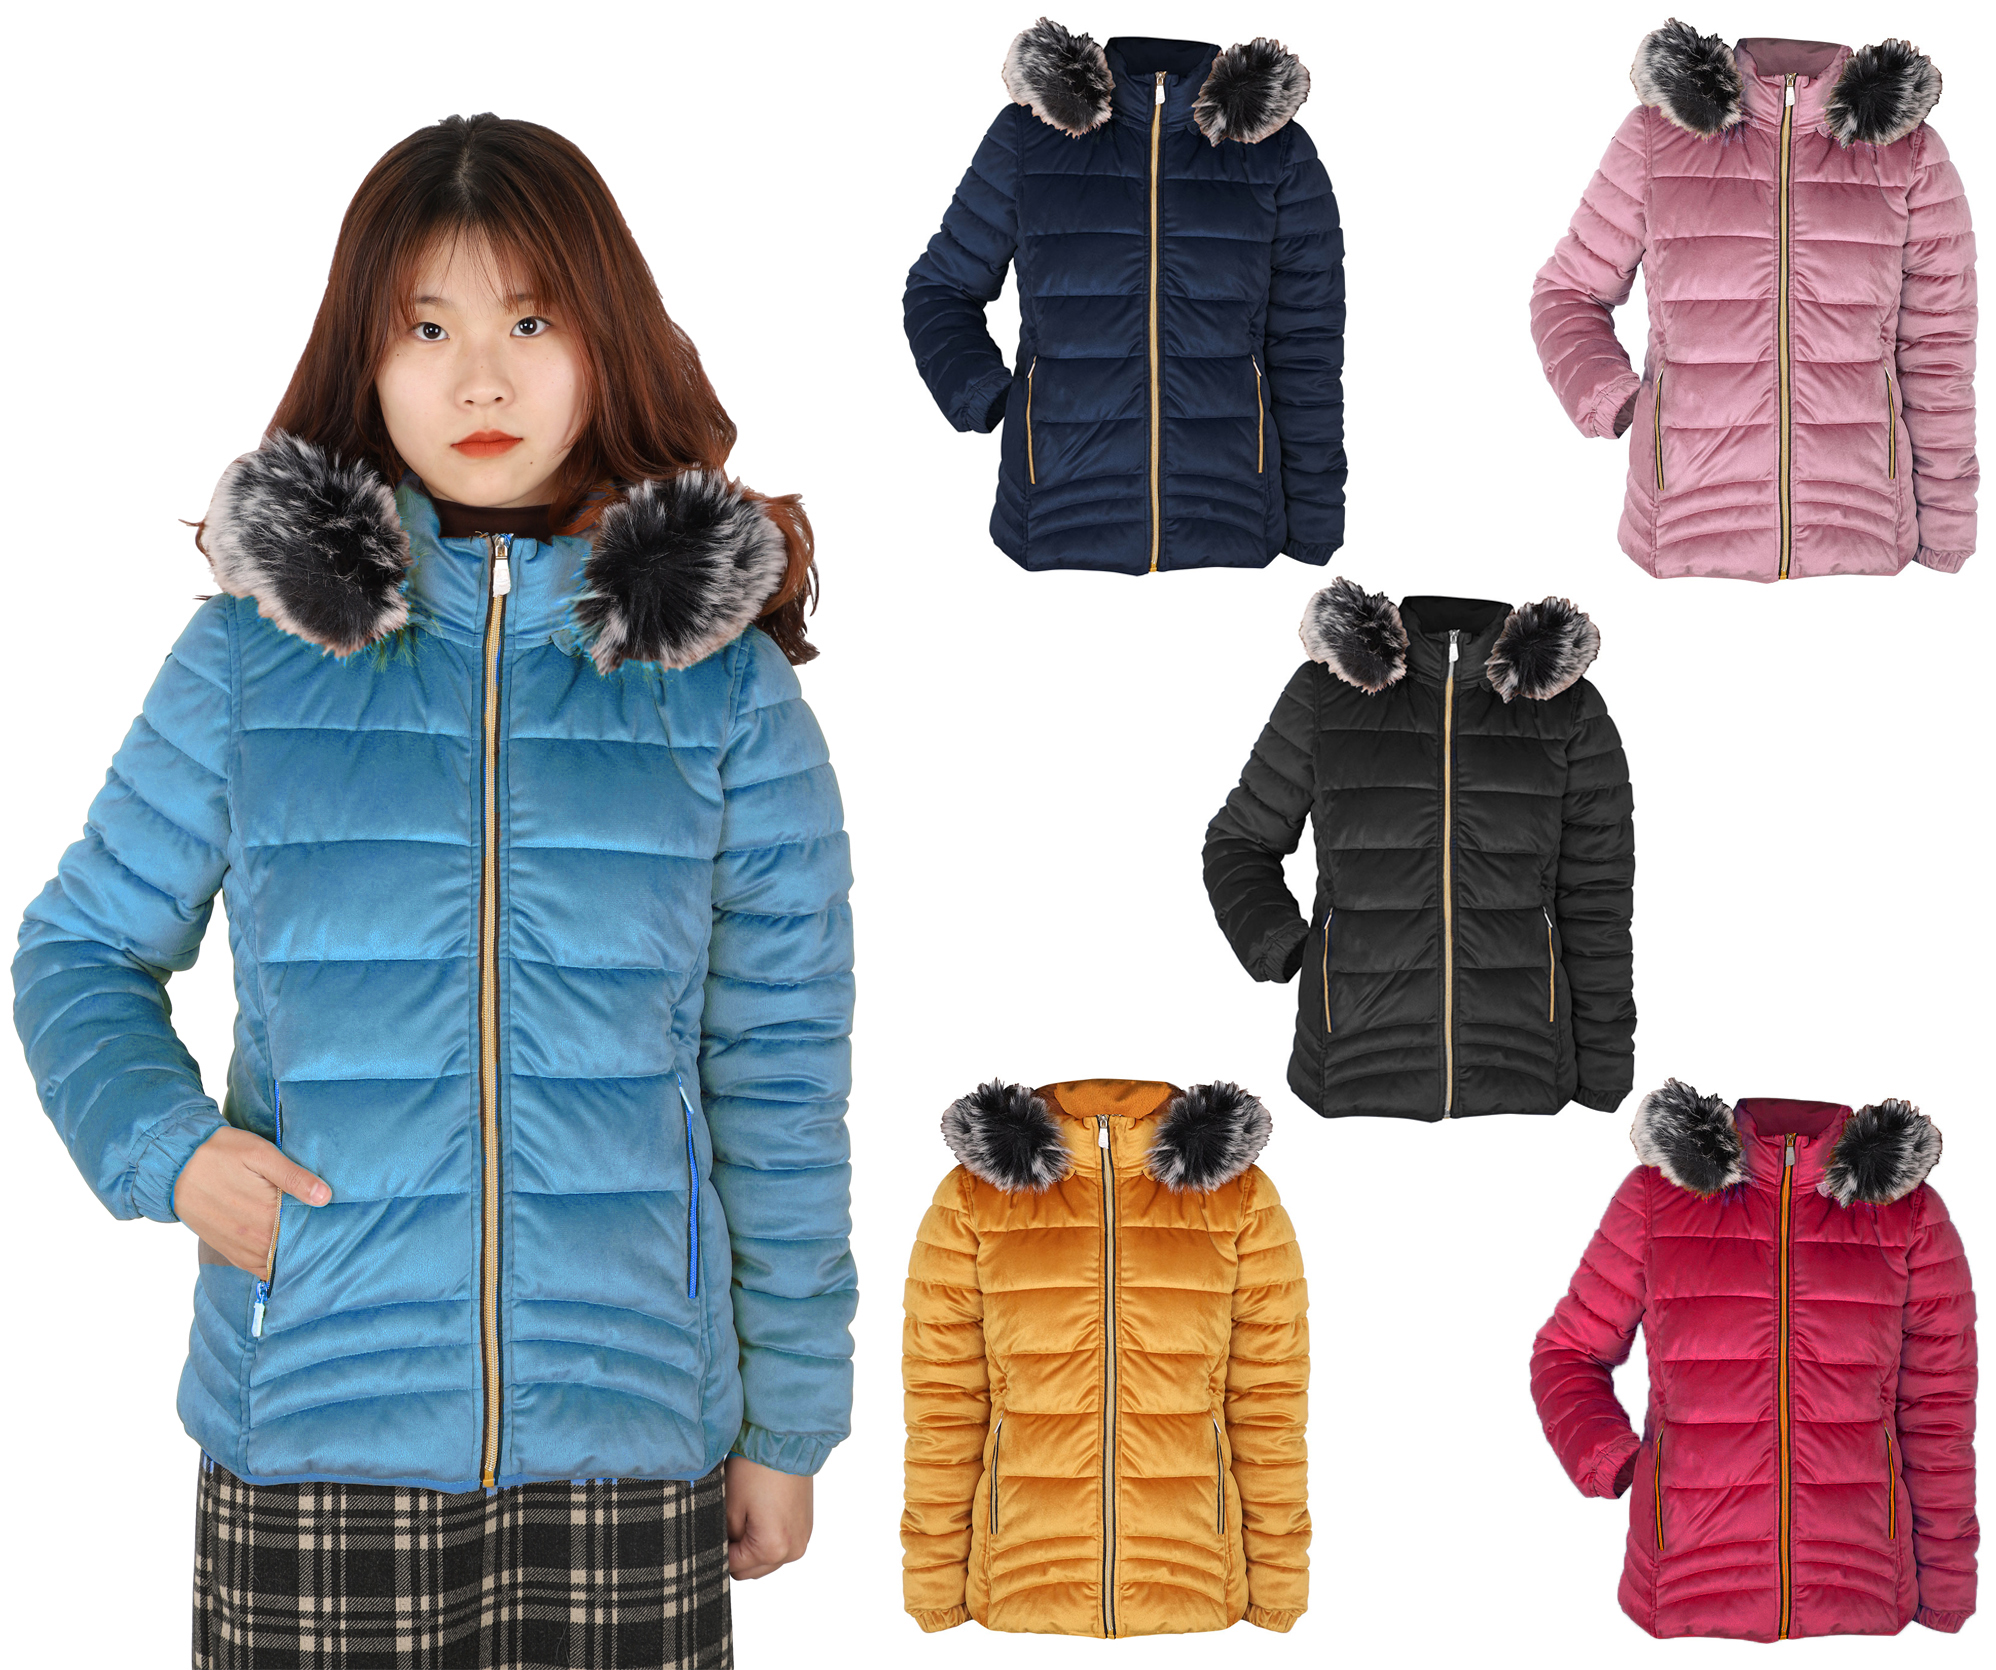 Women's Puffer Down Zip-Up Winter JACKETs w/ Faux Fur Hood & Cargo Pockets - Choose Your Color(s)